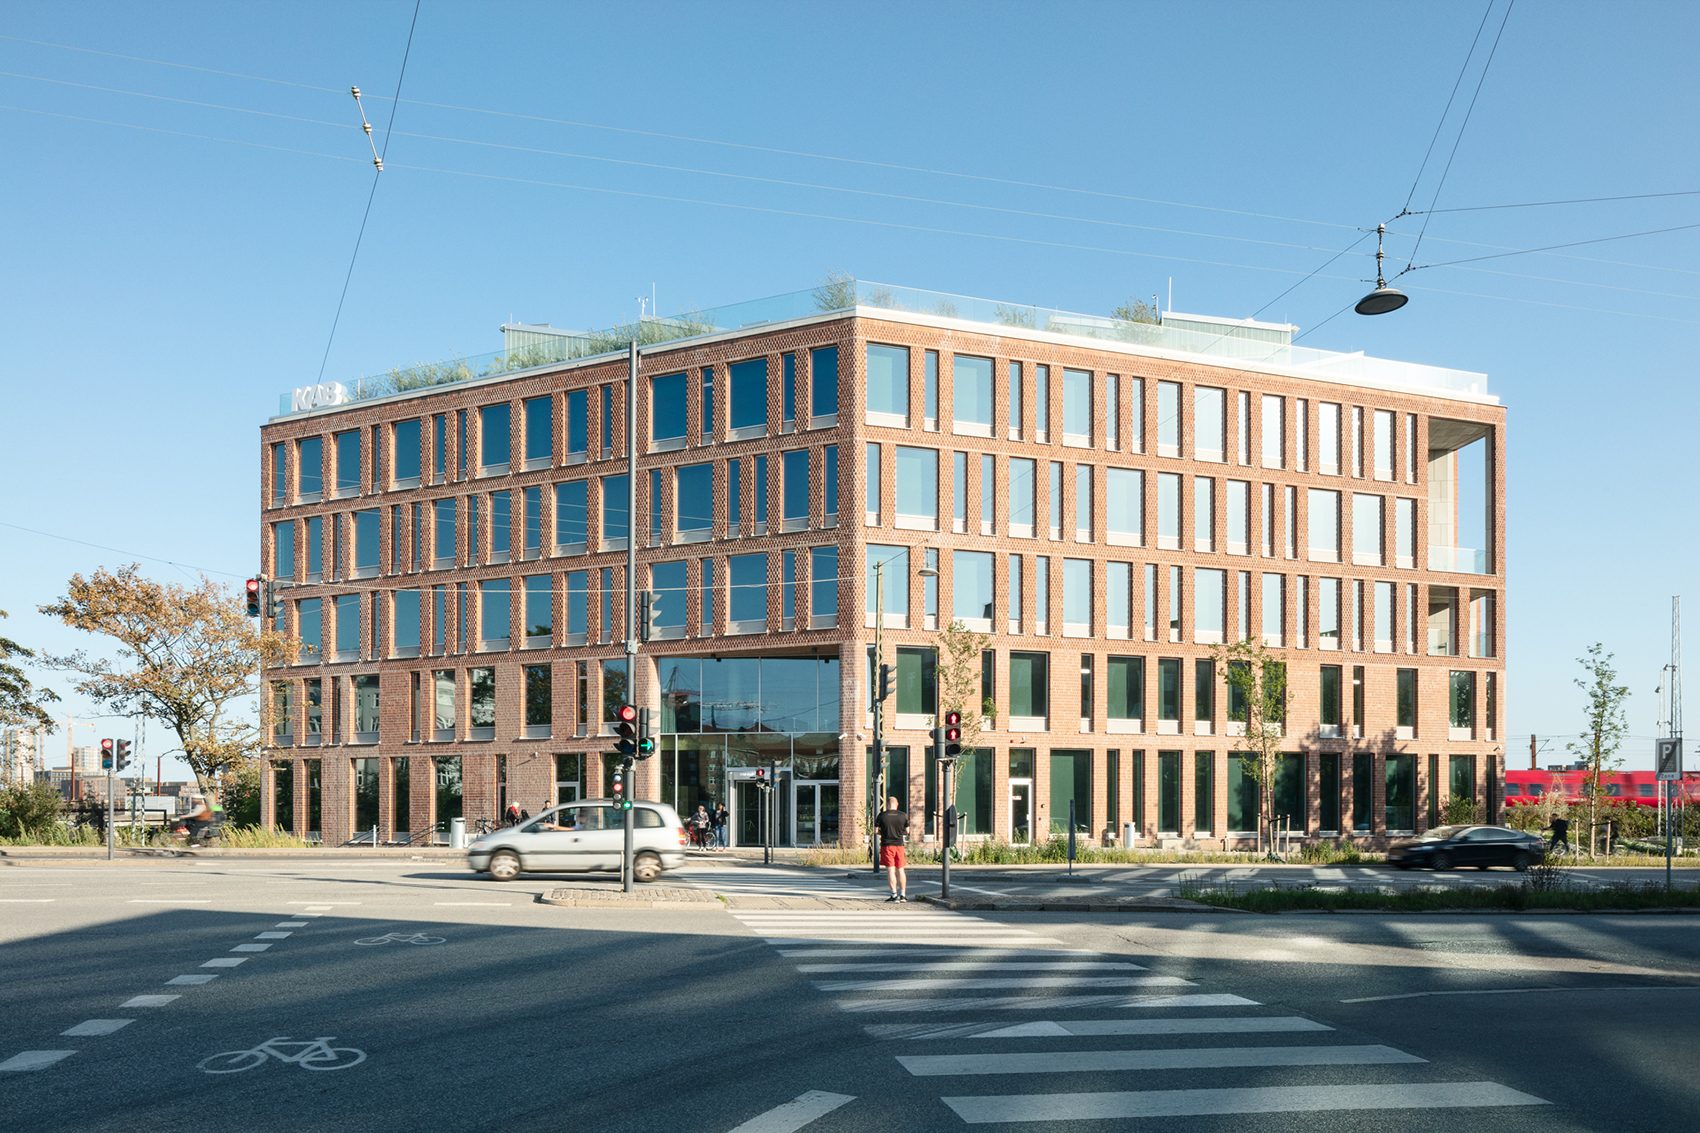 KAB住房协会总部，哥本哈根/家一般的办公场所-15